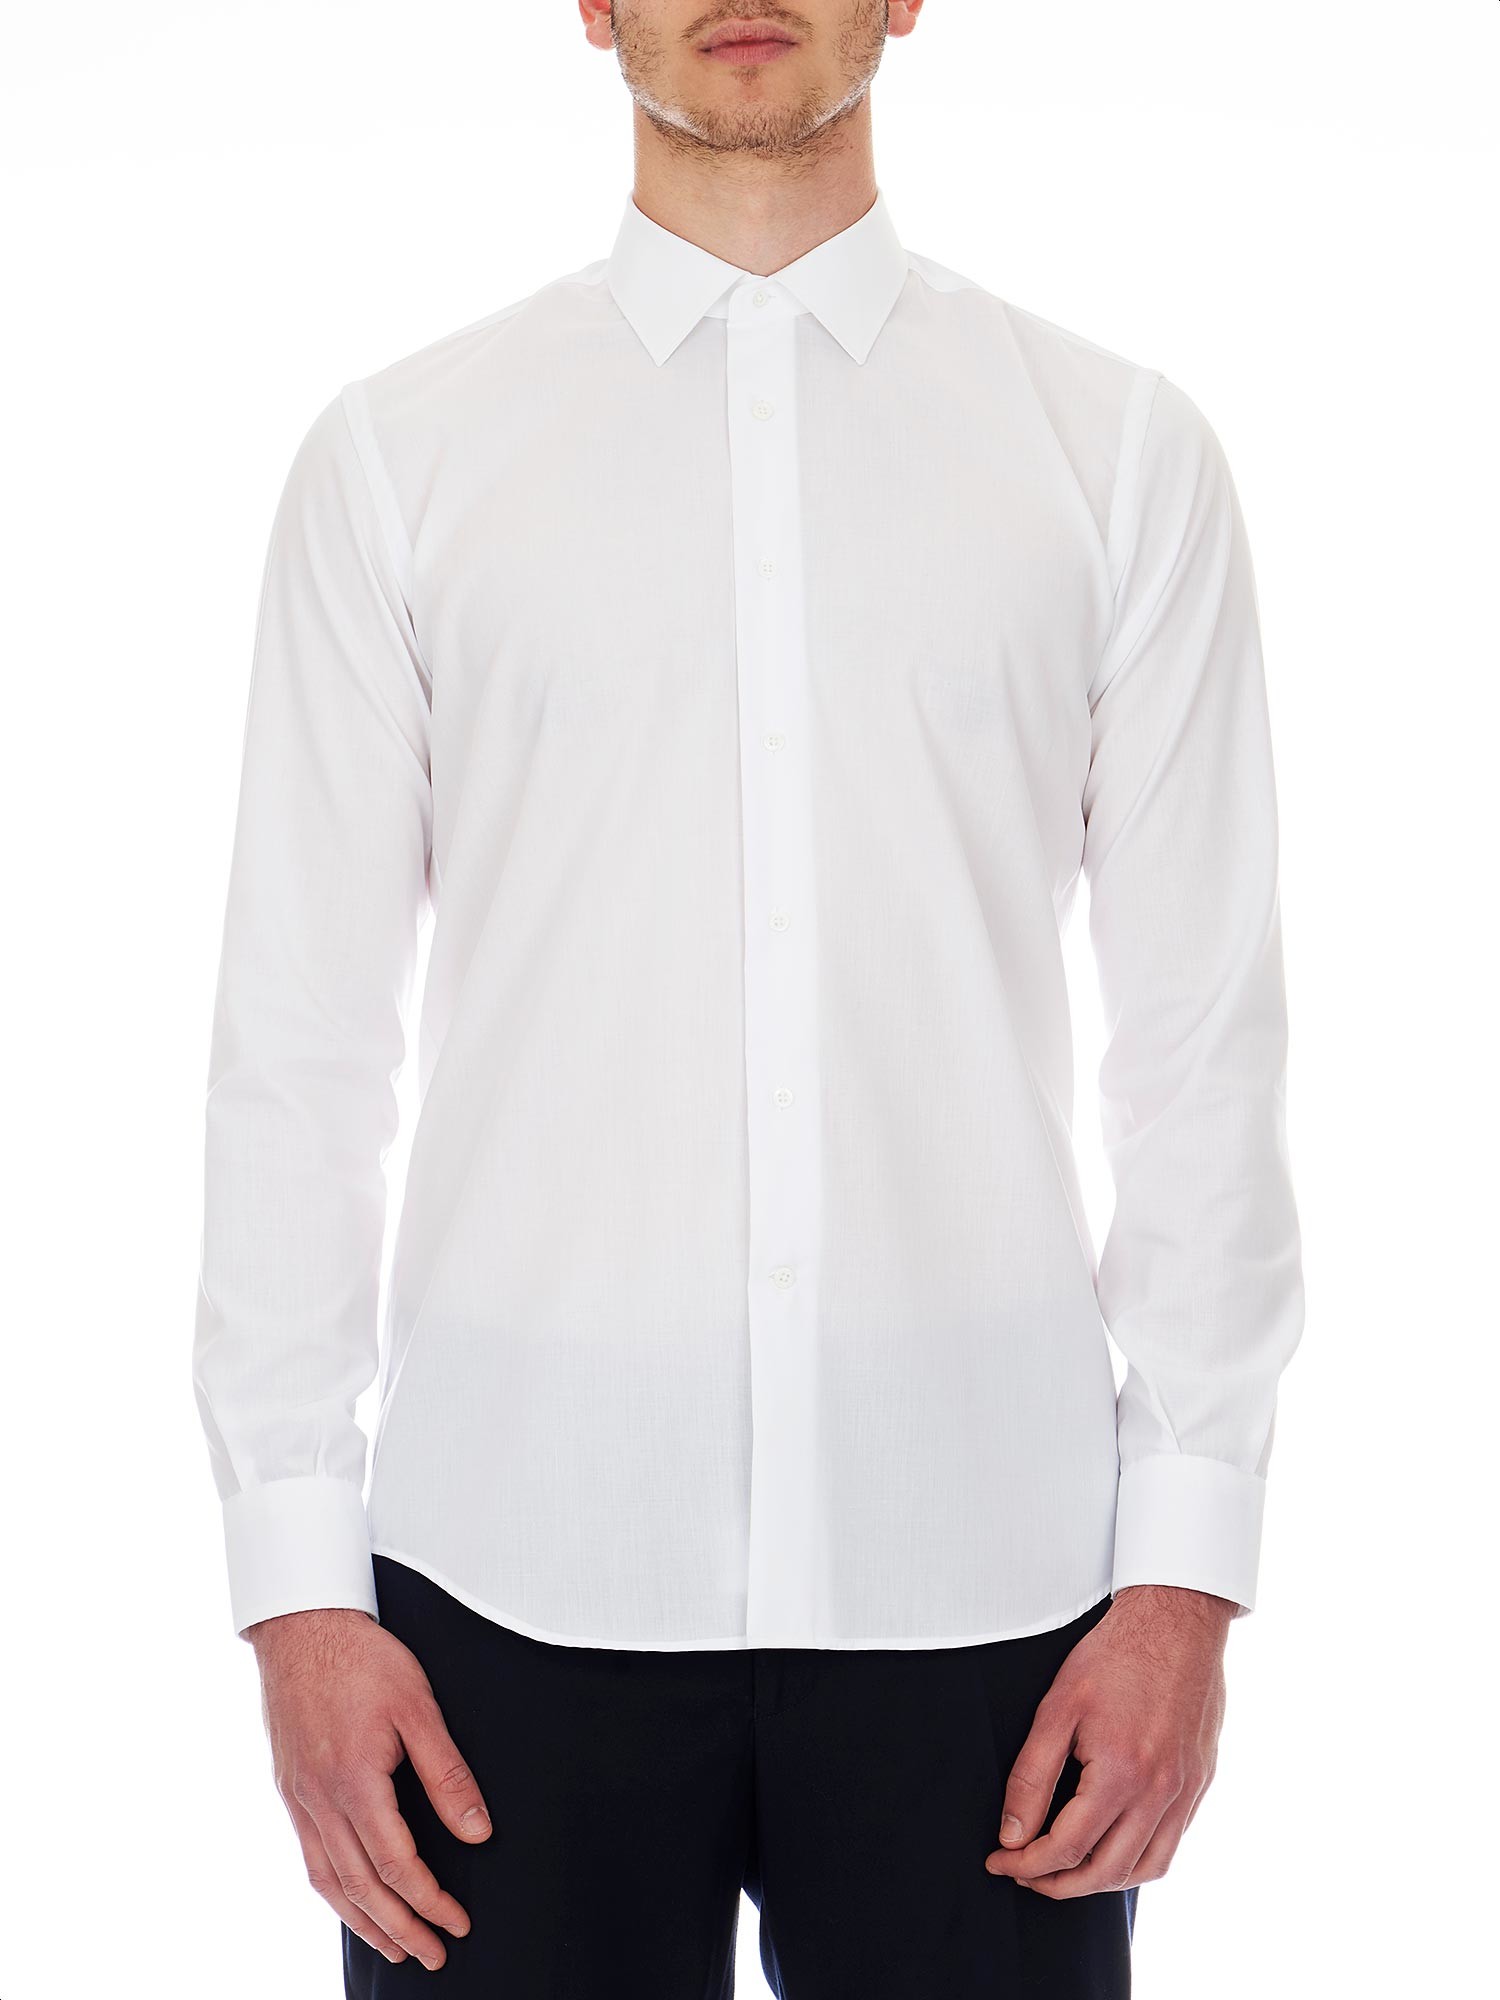 Del Siena - White non-iron men's shirt